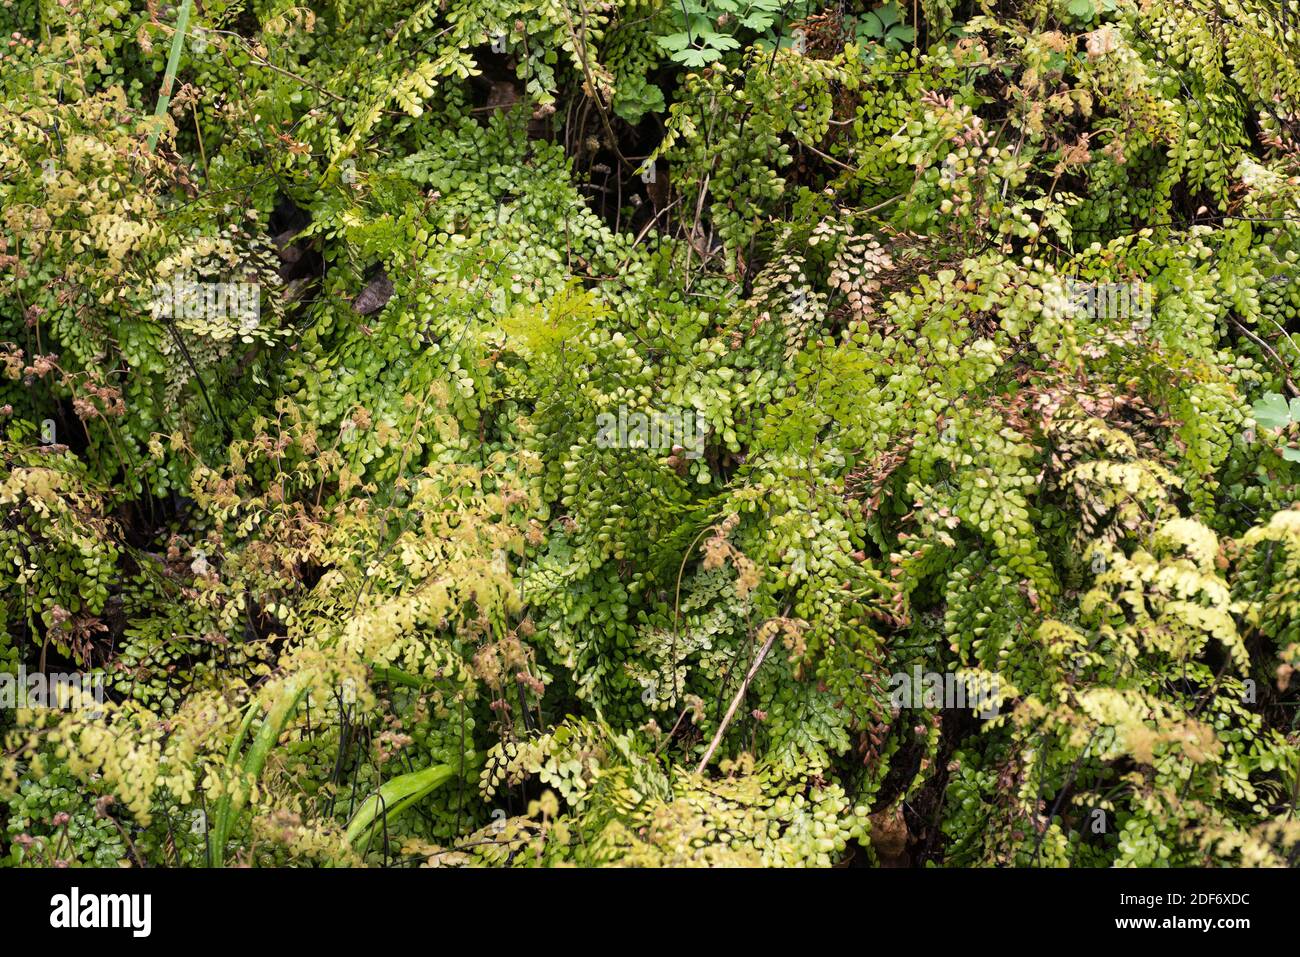 Evergreen maidenhair o Himalayan maidenhair (Adiantum venustum) es un helecho nativo de Himalaya y China. Foto de stock